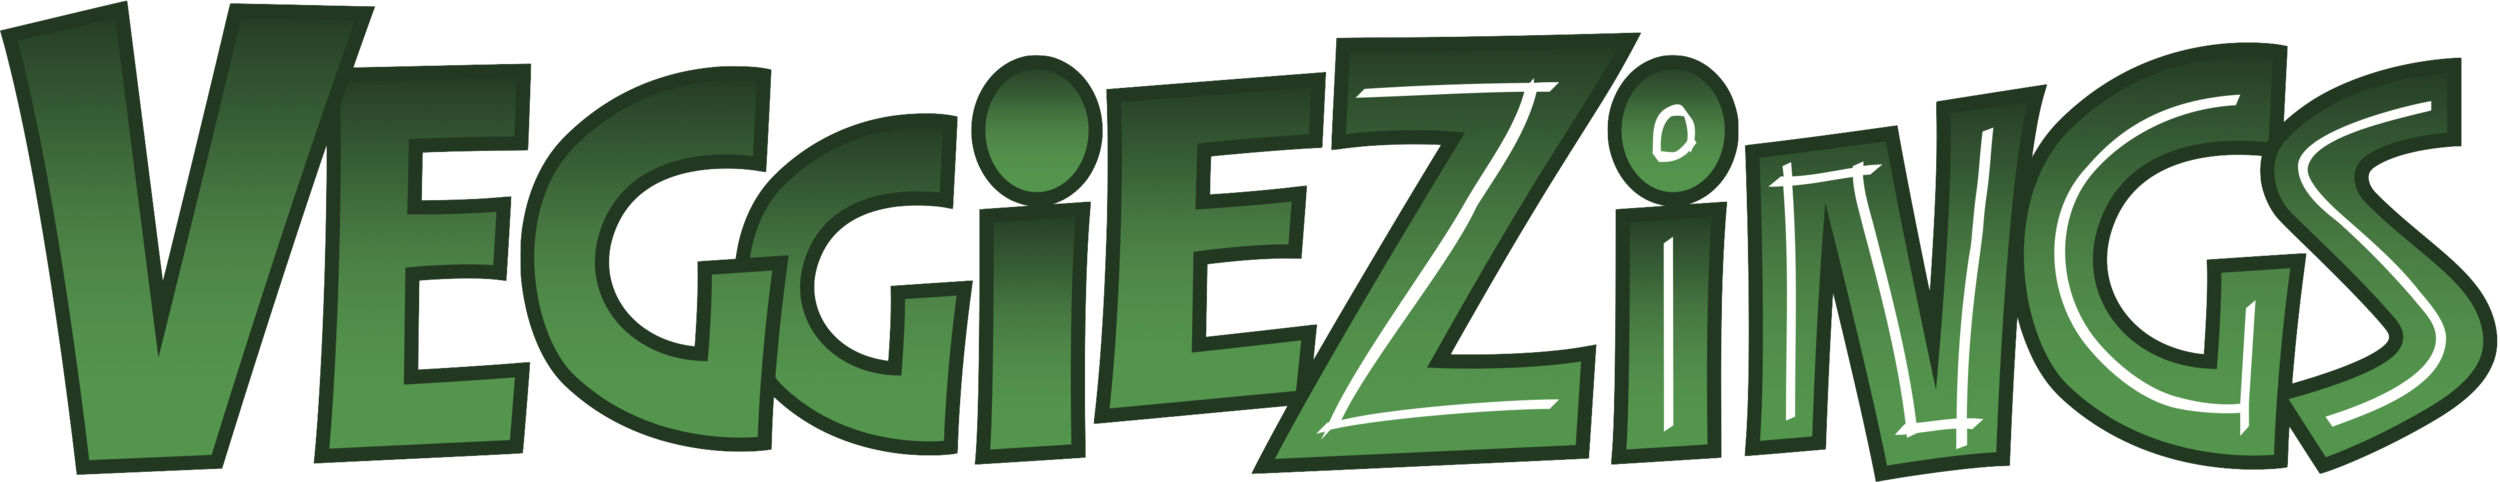 VeggieZings_Logo_trans.png